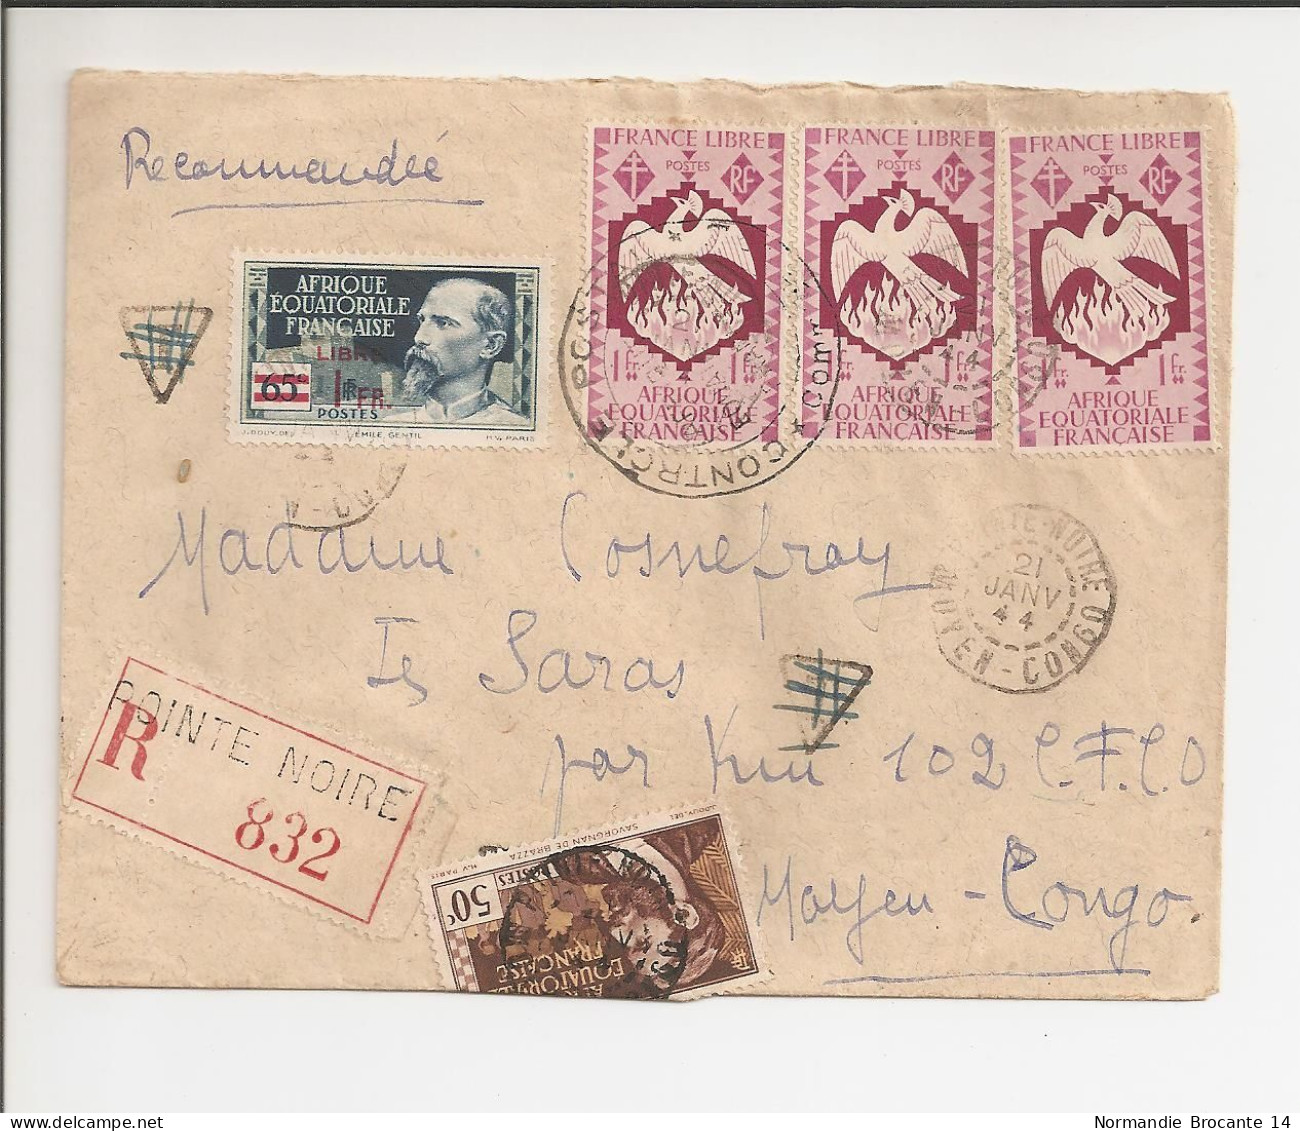 Lettre Recommandée AEF (Moyen Congo) Janvier 1944 - Timbre AEF France Libre - Briefe U. Dokumente